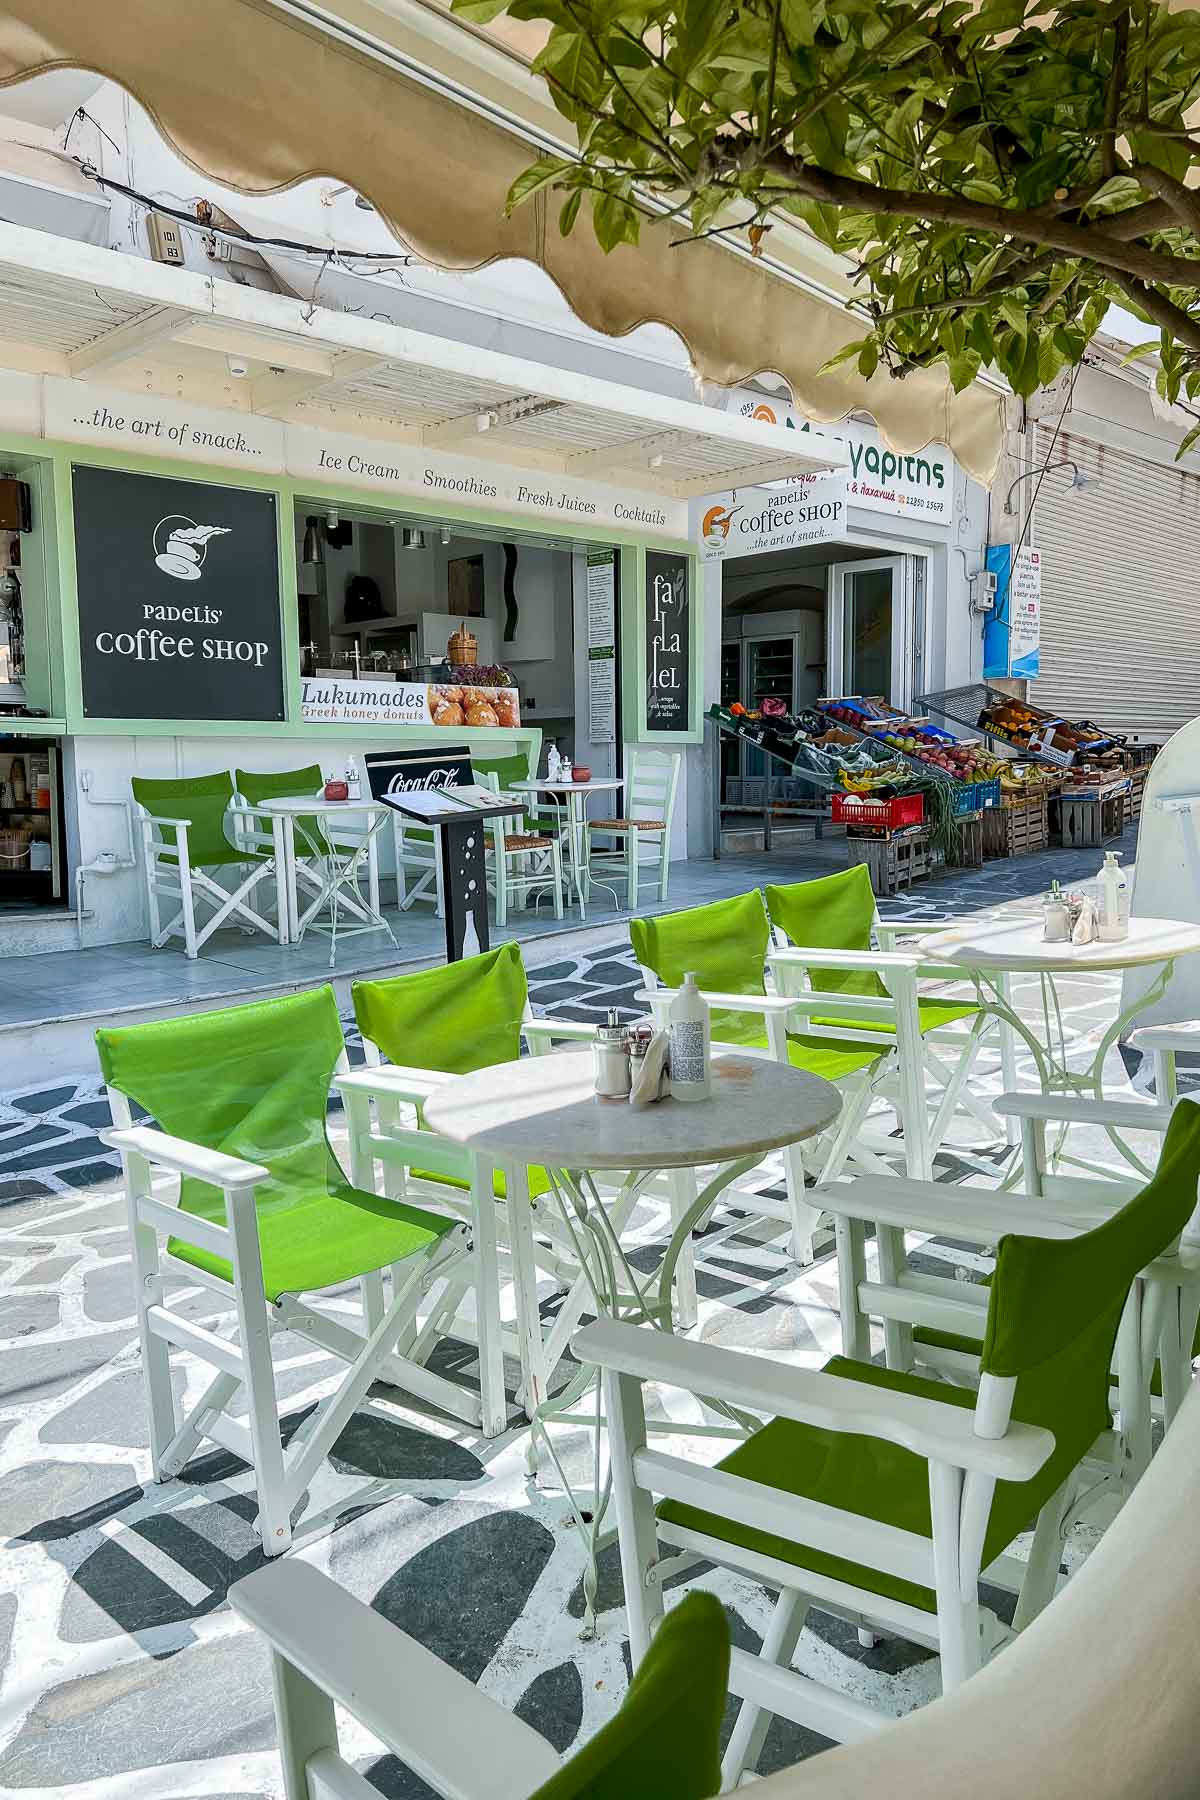 Padelis Coffee Shop in Naxos